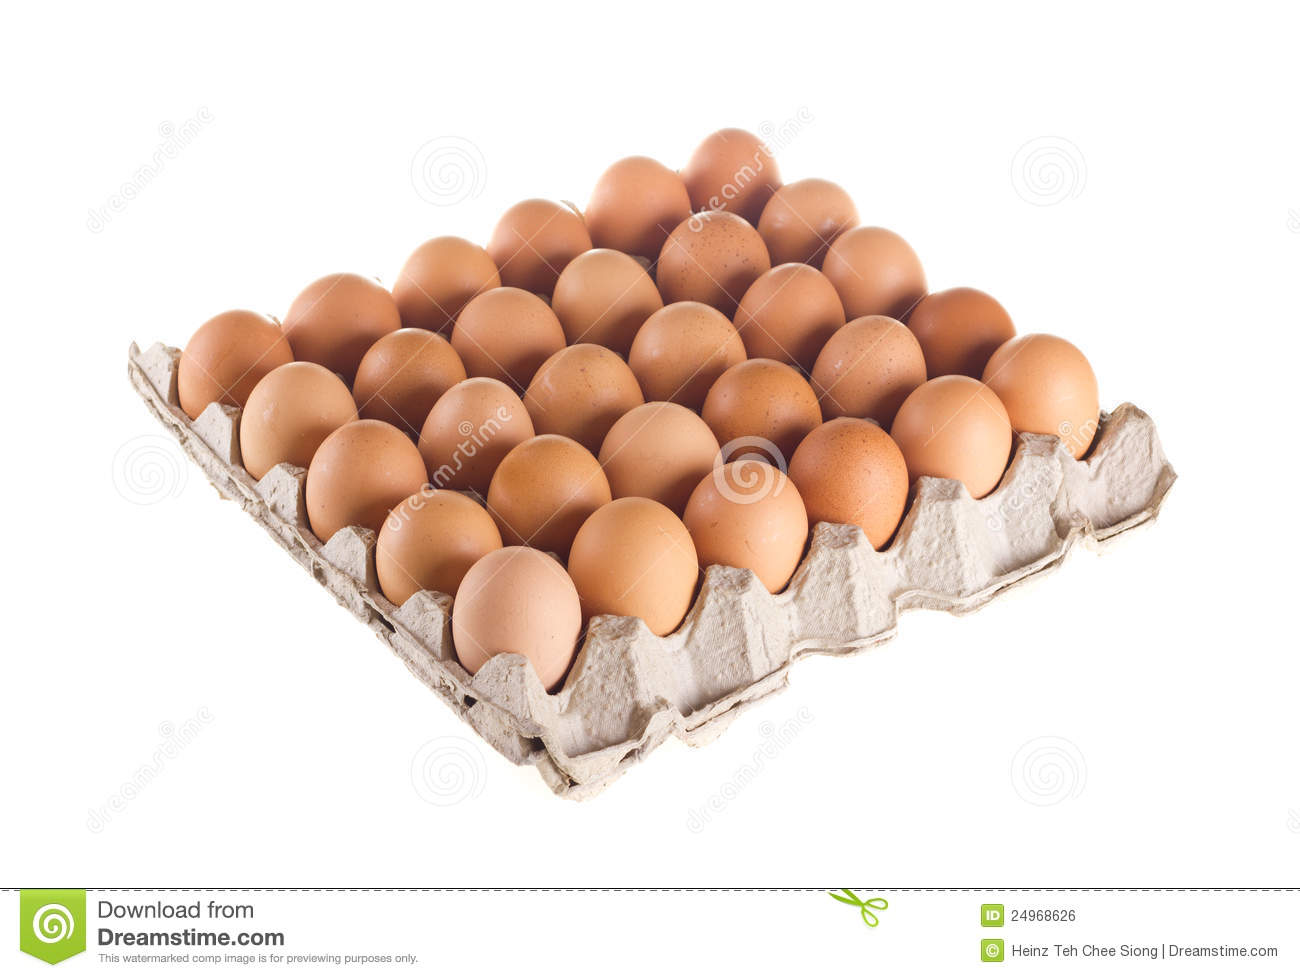 Carton Of Fresh Brown Eggs Royalty Free Stock Image   Image  24968626